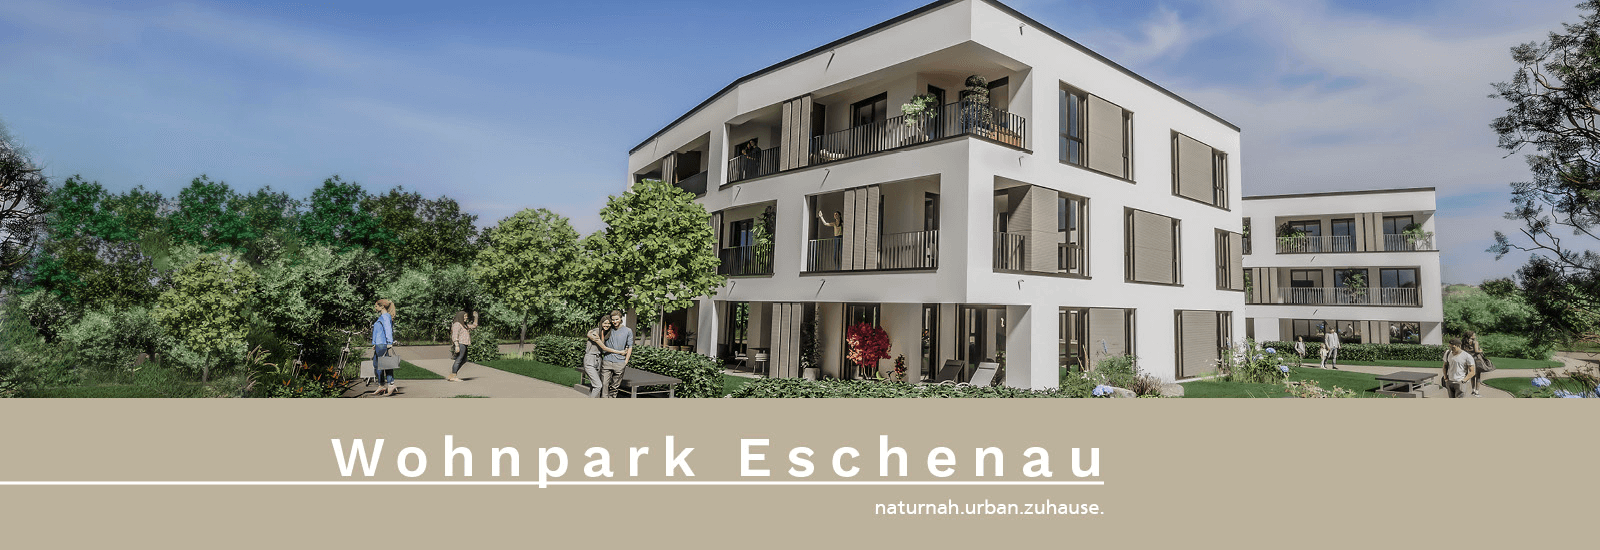 Wohnpark Eschenau